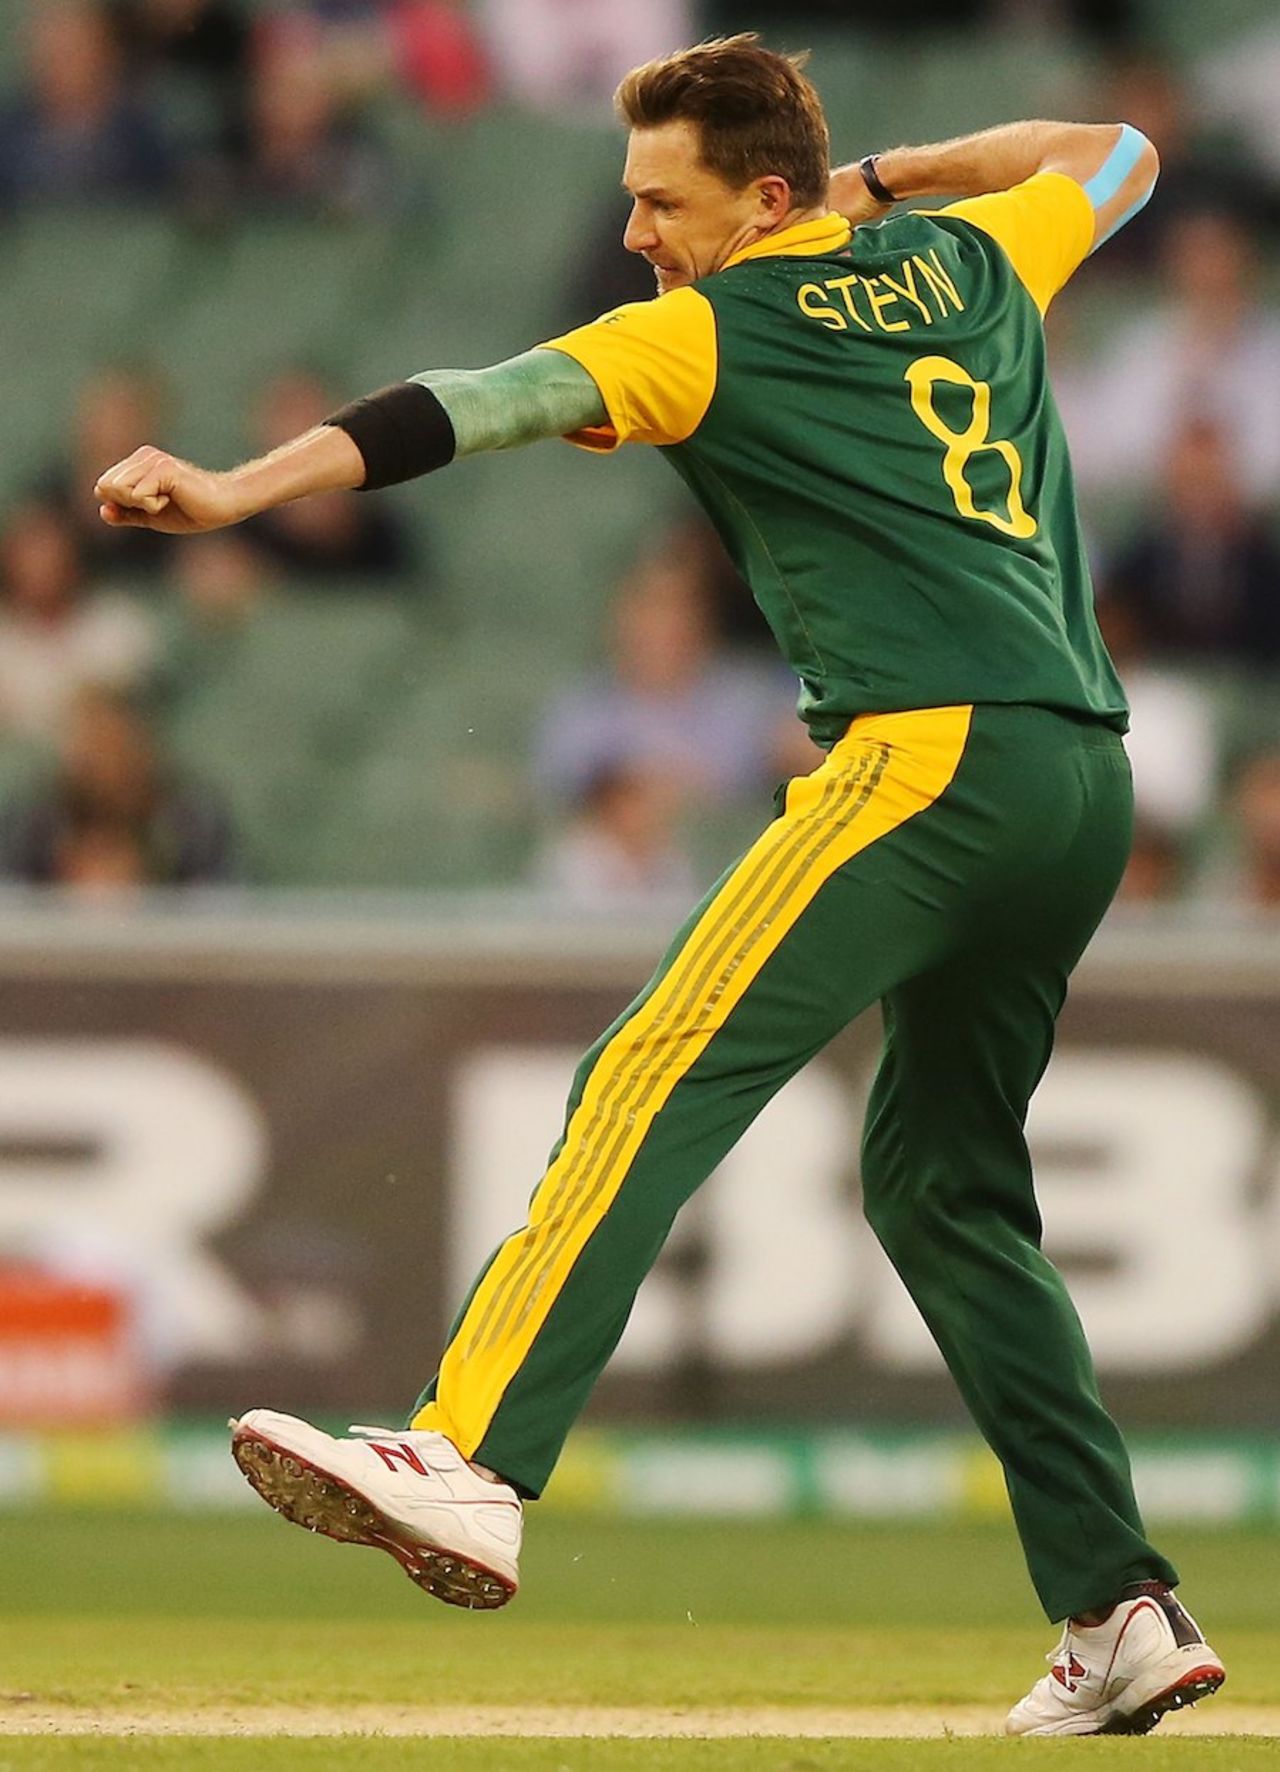 Dale Steyn is pumped after a wicket, Australia v South Africa, 4th ODI, Melbourne, November 21, 2014